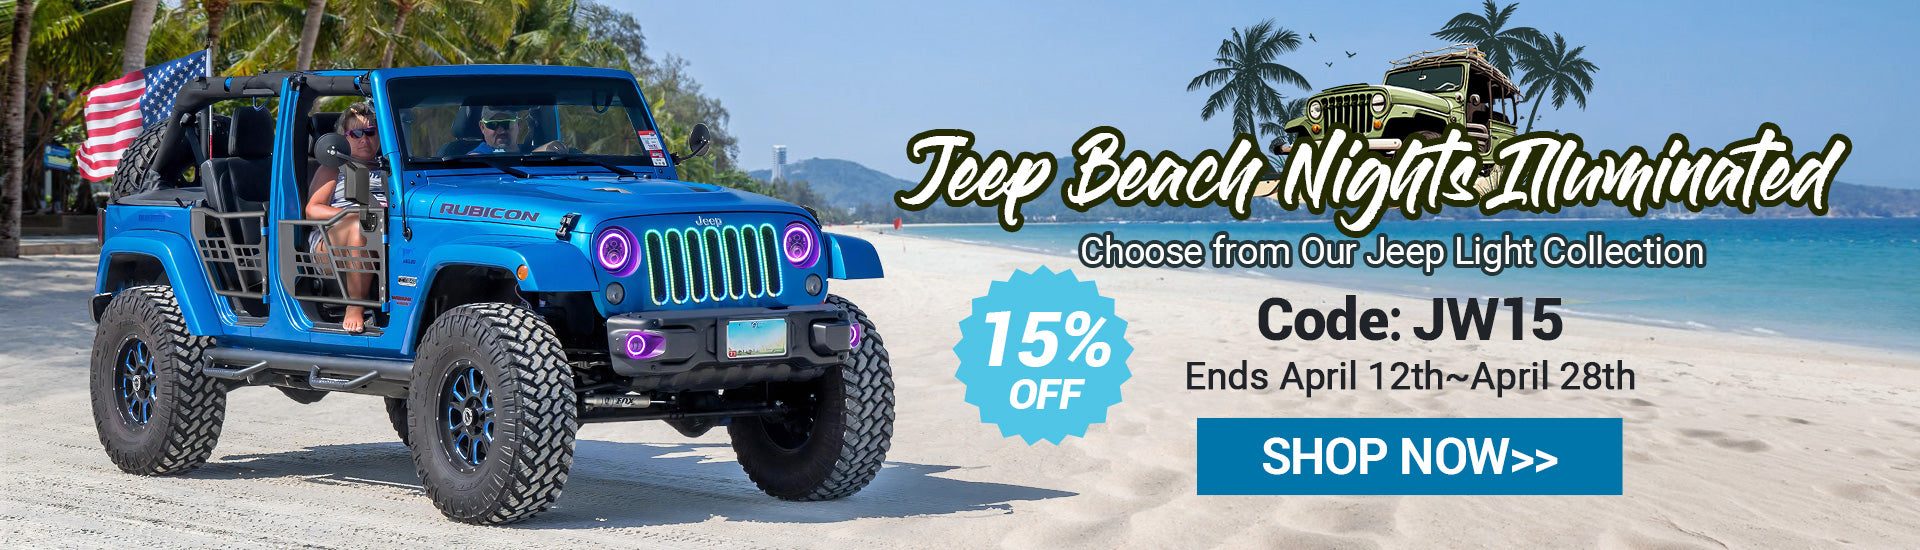 Jeep Beach Daytona LED Lights On Sale